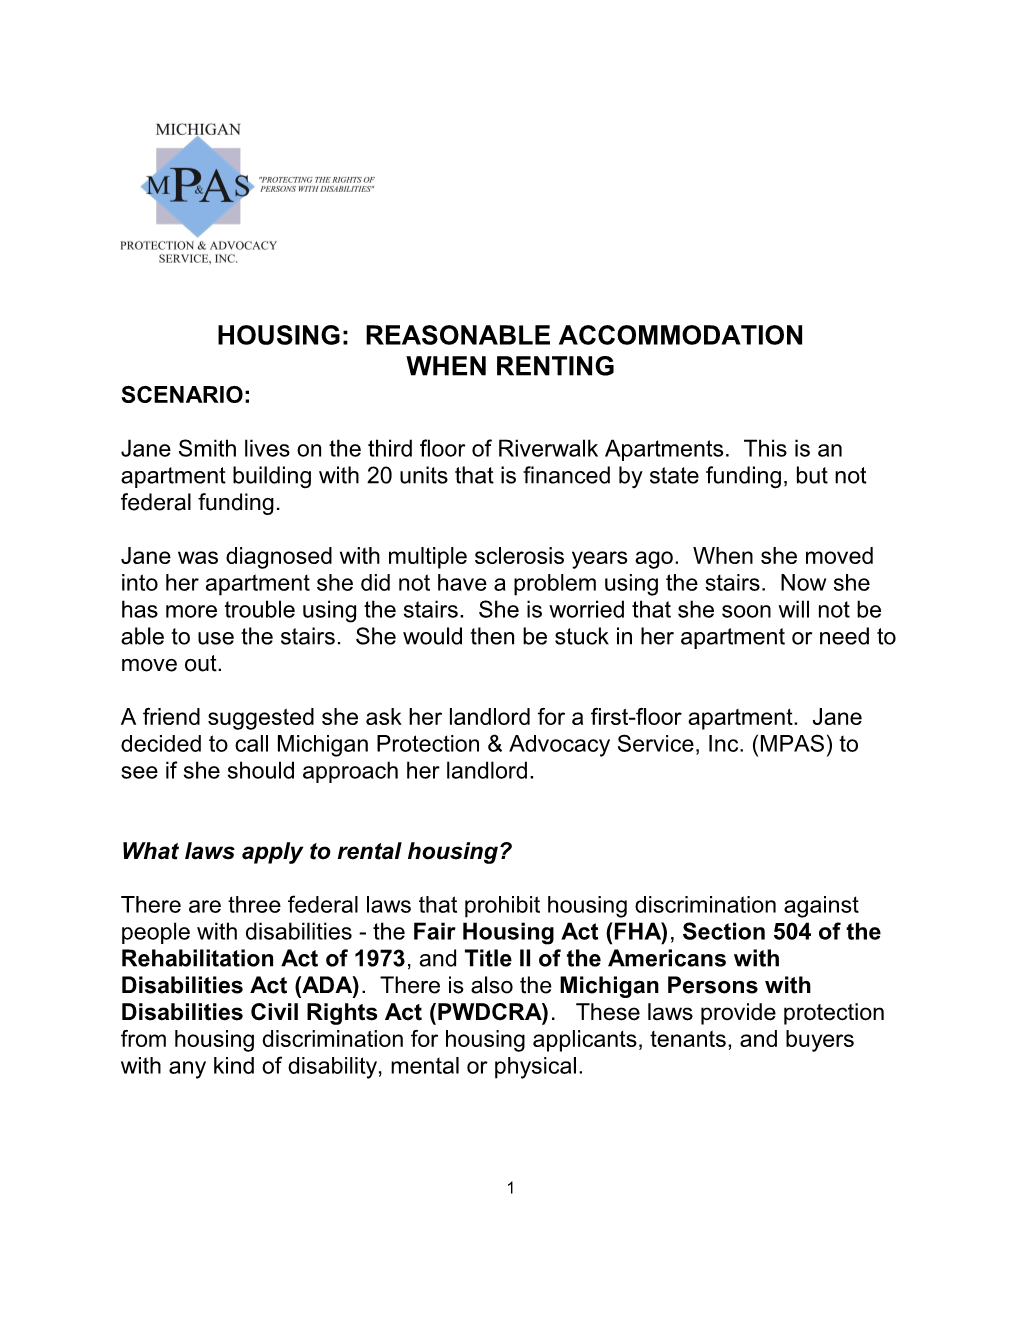 Housing: Reasonable Accommodation